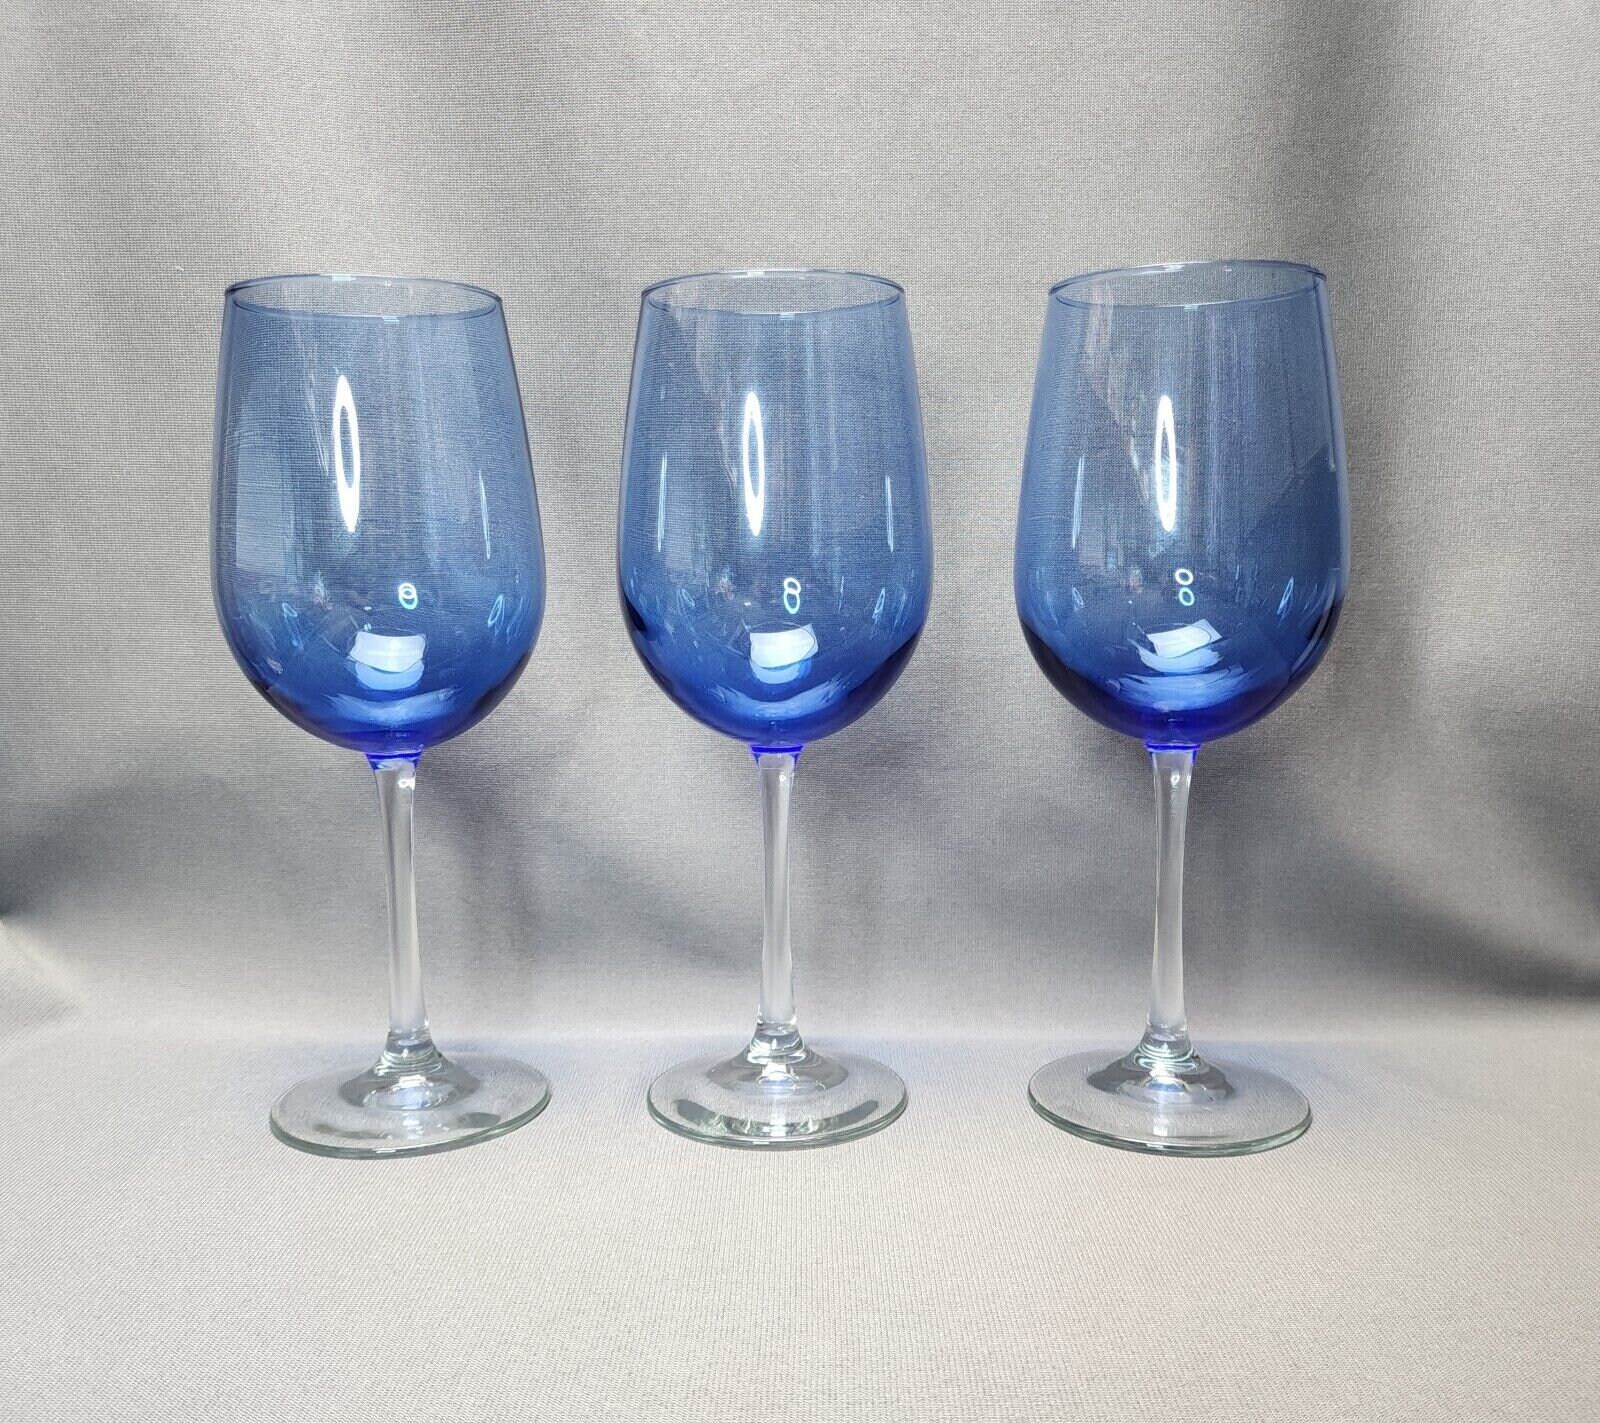 Large Wine Glass 860ml/29oz Name Custom Gift for Wine Lover Glass